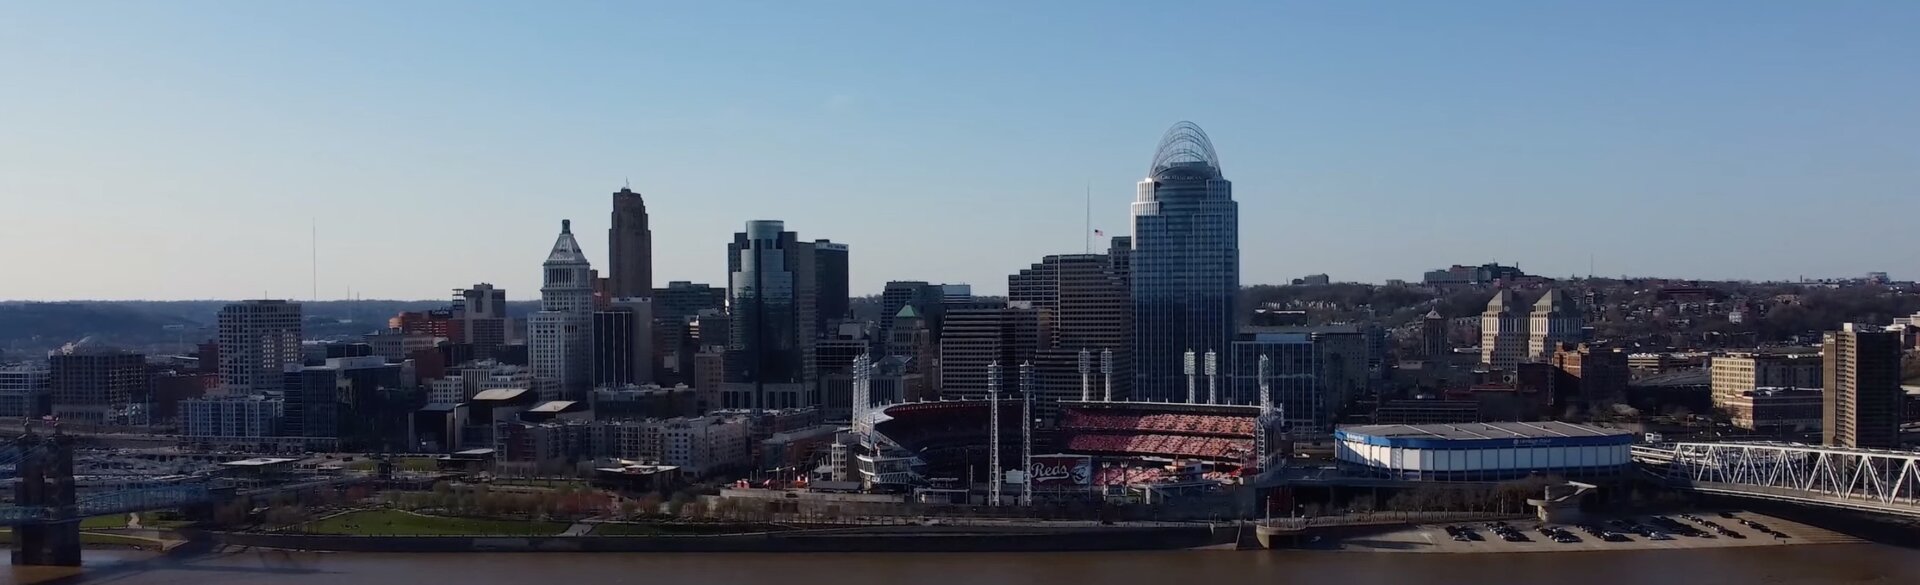 Coast of Cincinnati with the Reds stadium